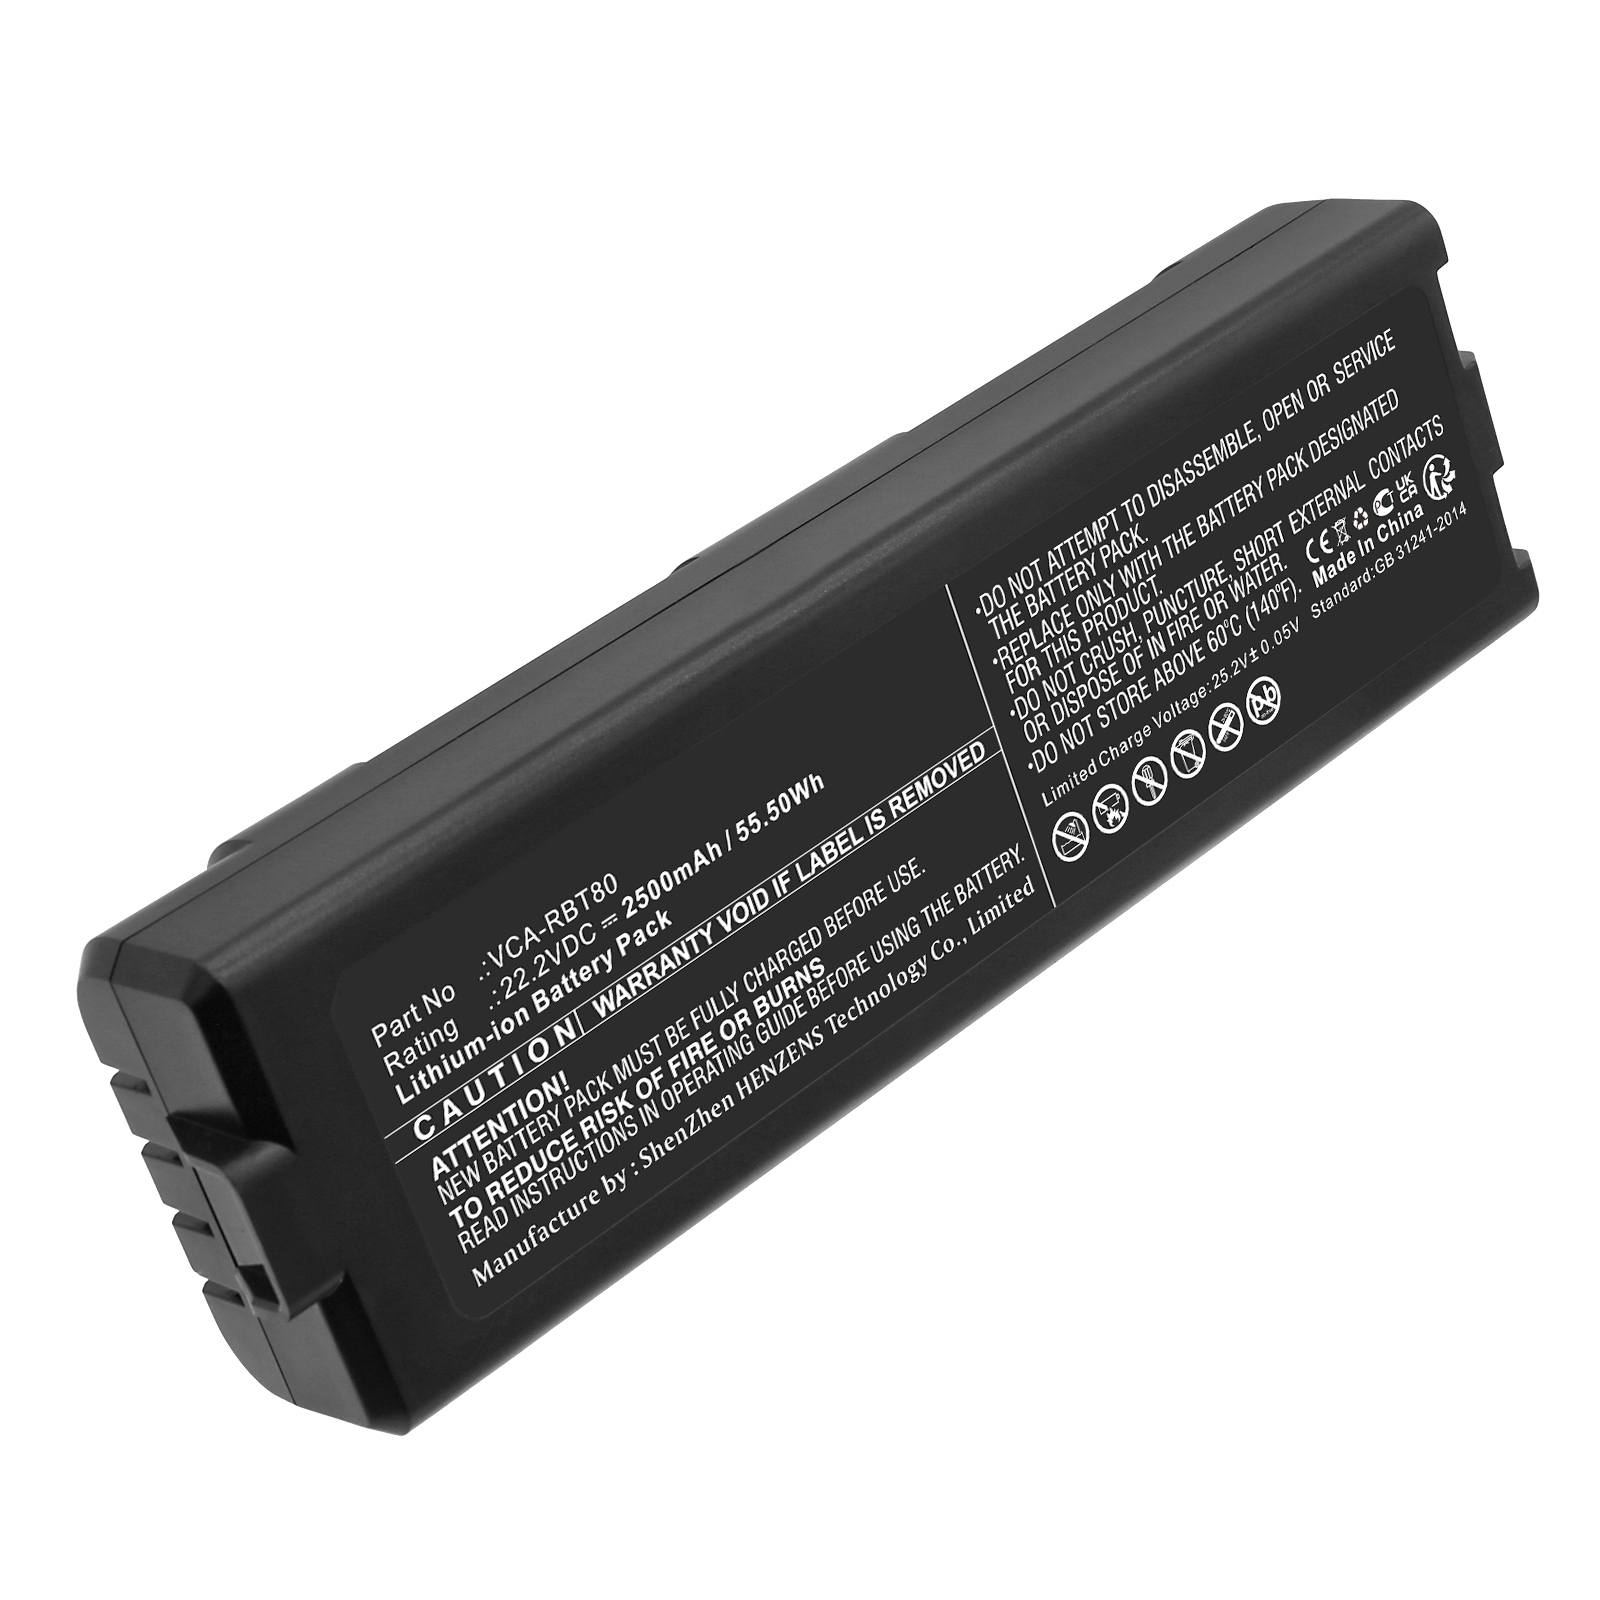 Synergy Digital Vacuum Cleaner Battery, Compatible with Samsung VCA-RBT80 Vacuum Cleaner Battery (Li-ion, 22.2V, 2500mAh)